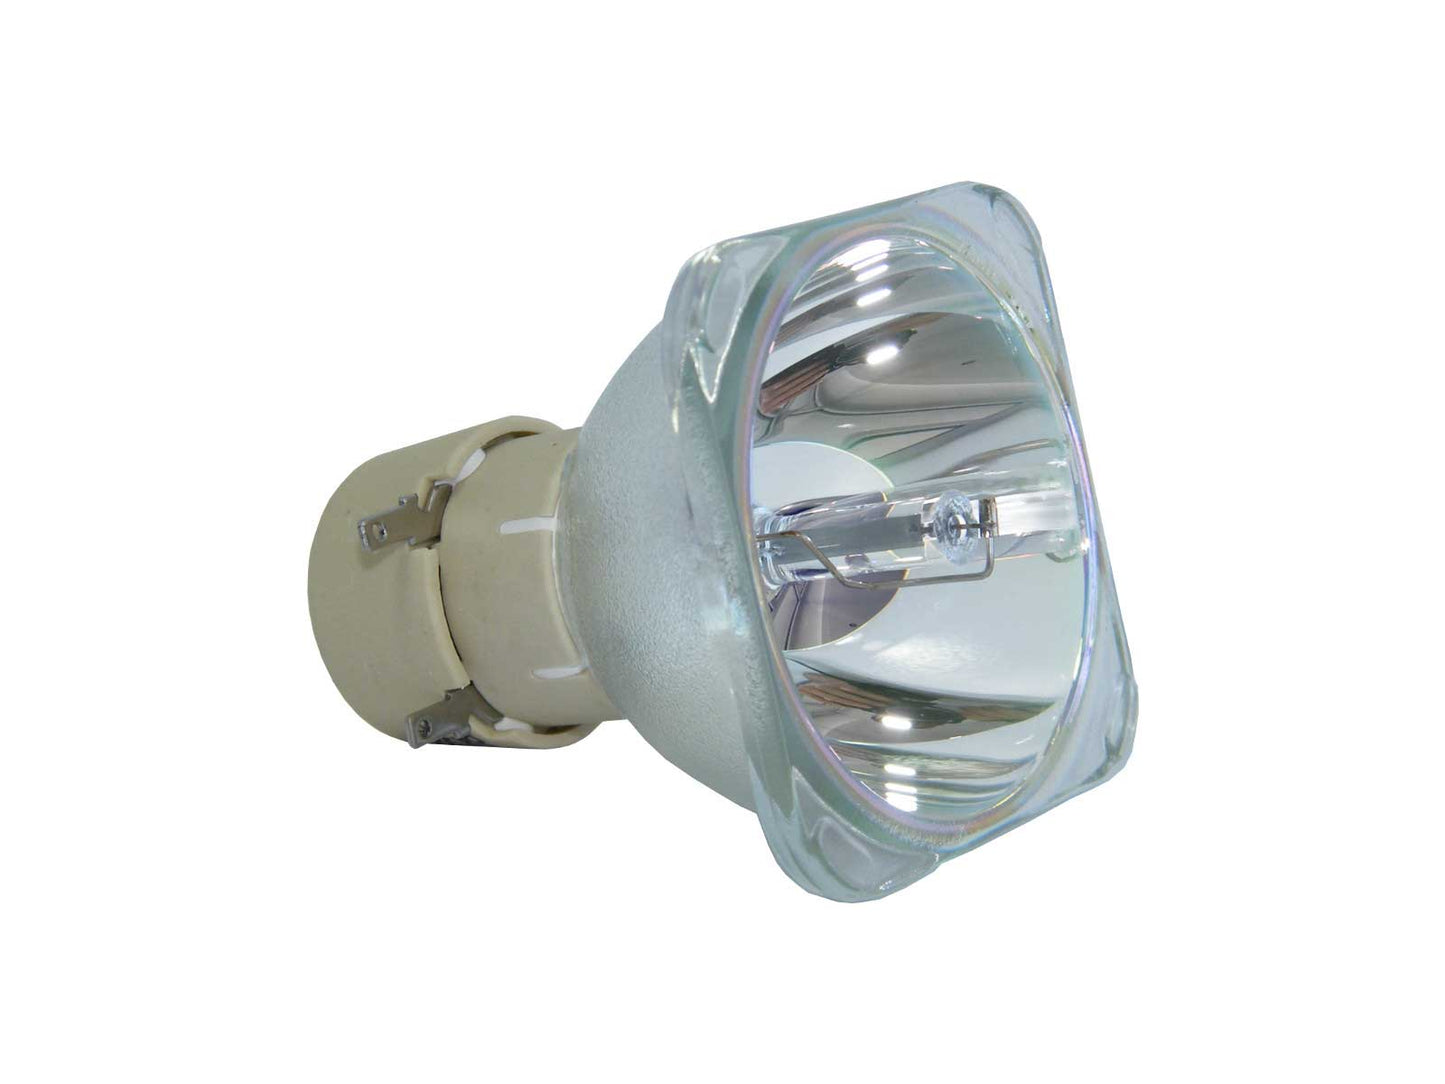 azurano Beamerlampe für ACER MC.JLC11.001 Ersatzlampe Projektorlampe - Bild 1